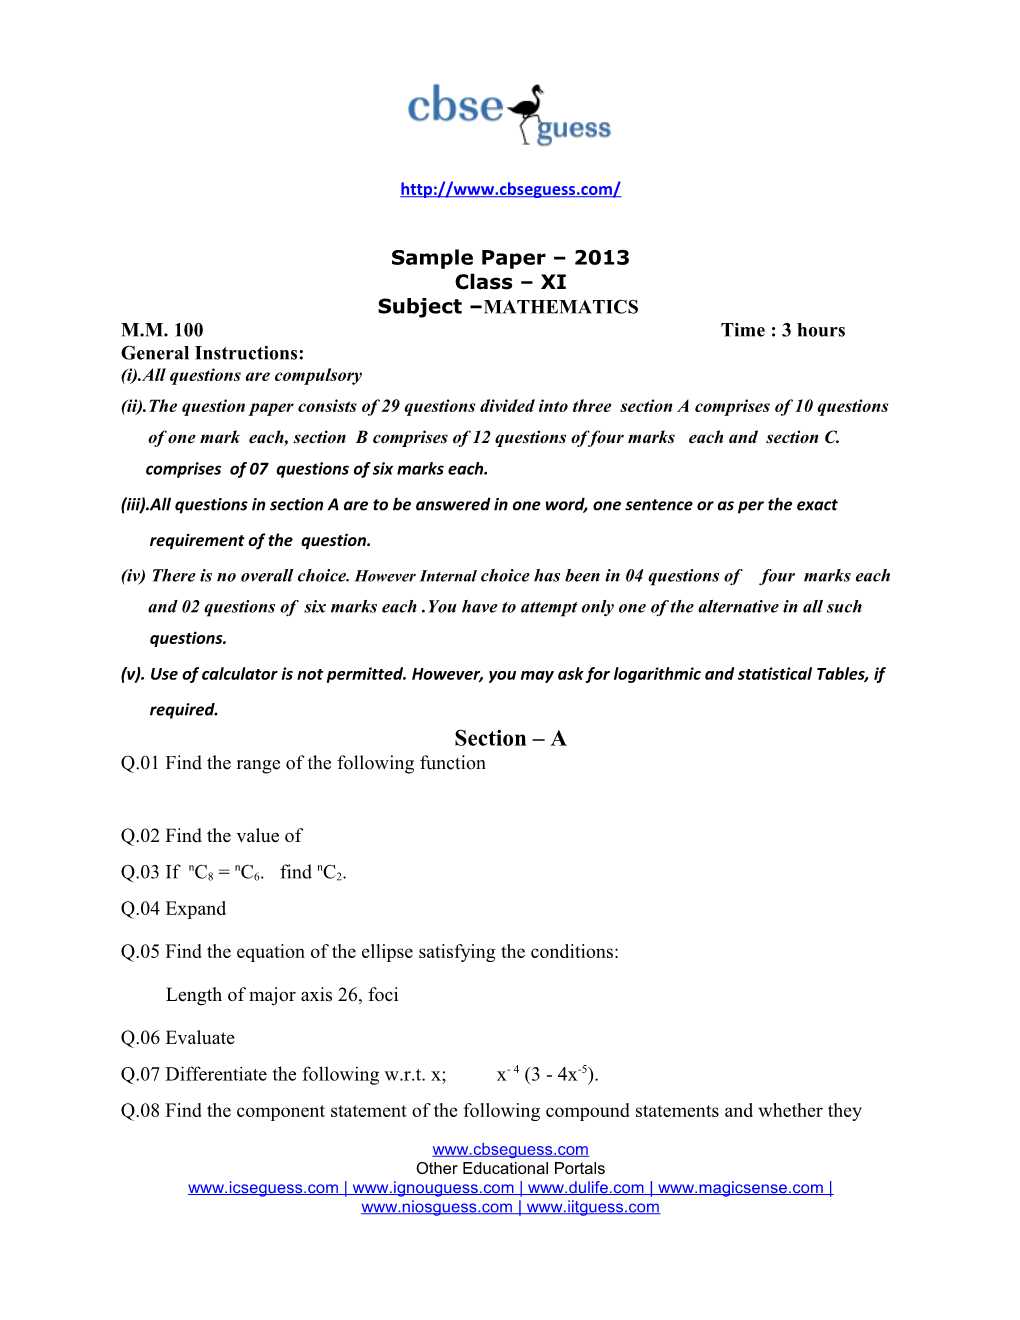 Sample Paper 2013Class Xisubject MATHEMATICS